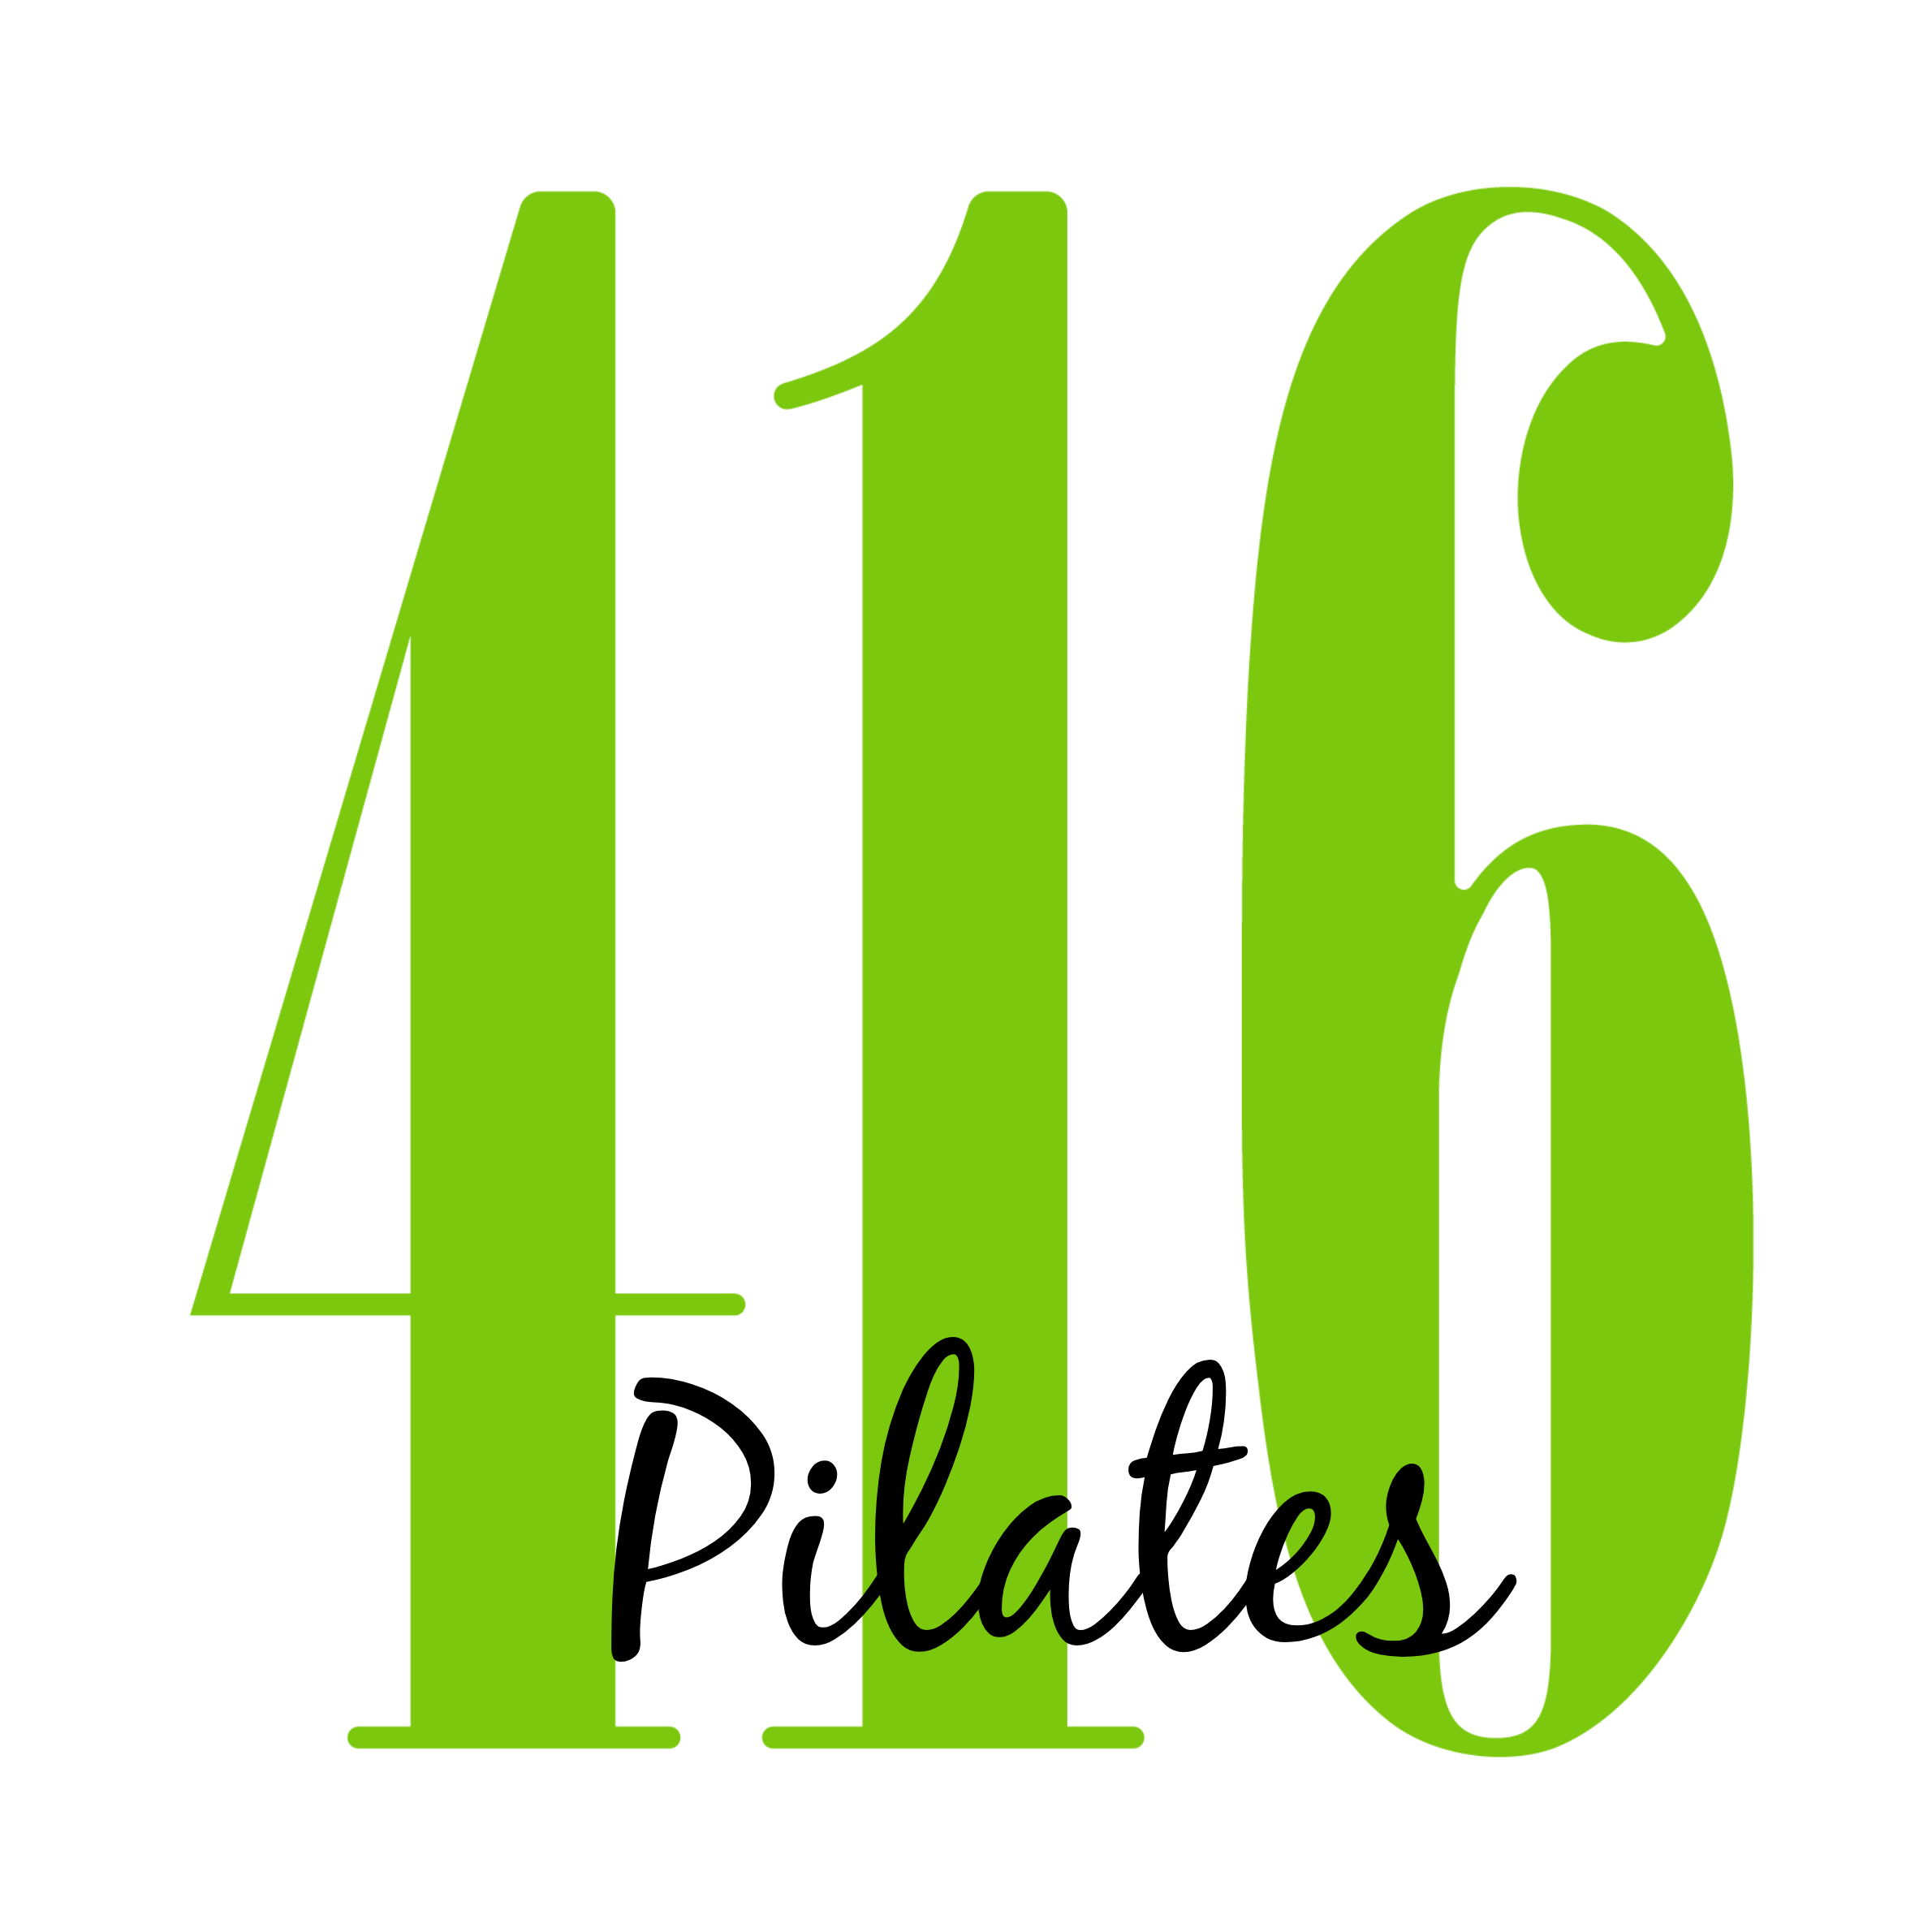 416 Pilates